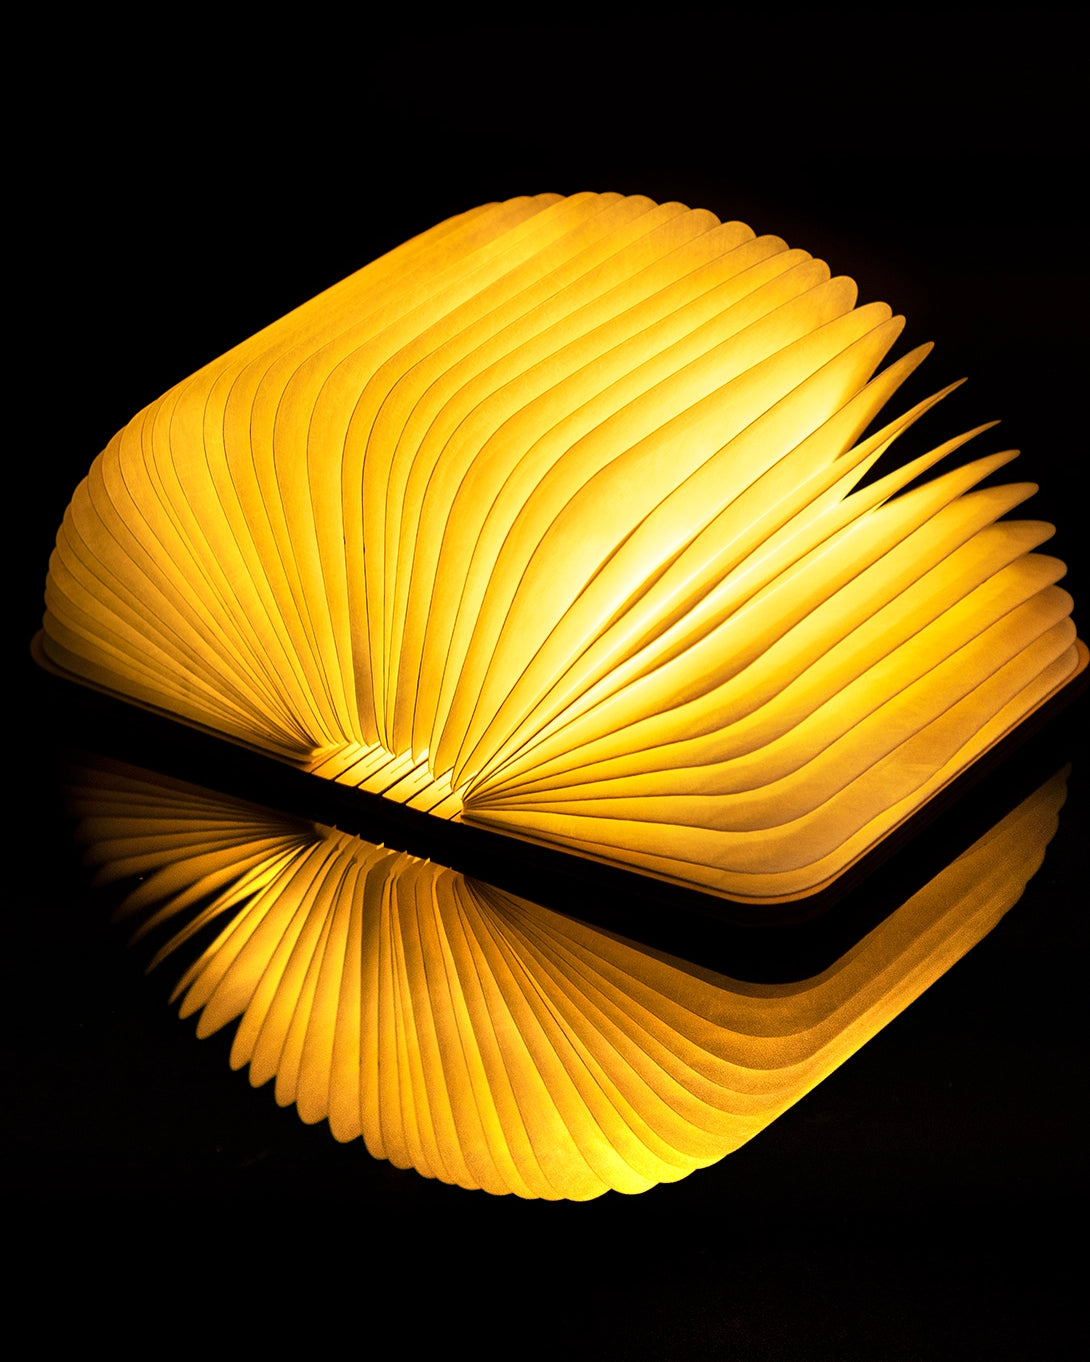 Brown Walnut Smart Book Gingko Nightstand Light Reading Lamp Bedside Table Nightlight Creative Ambient Lighting